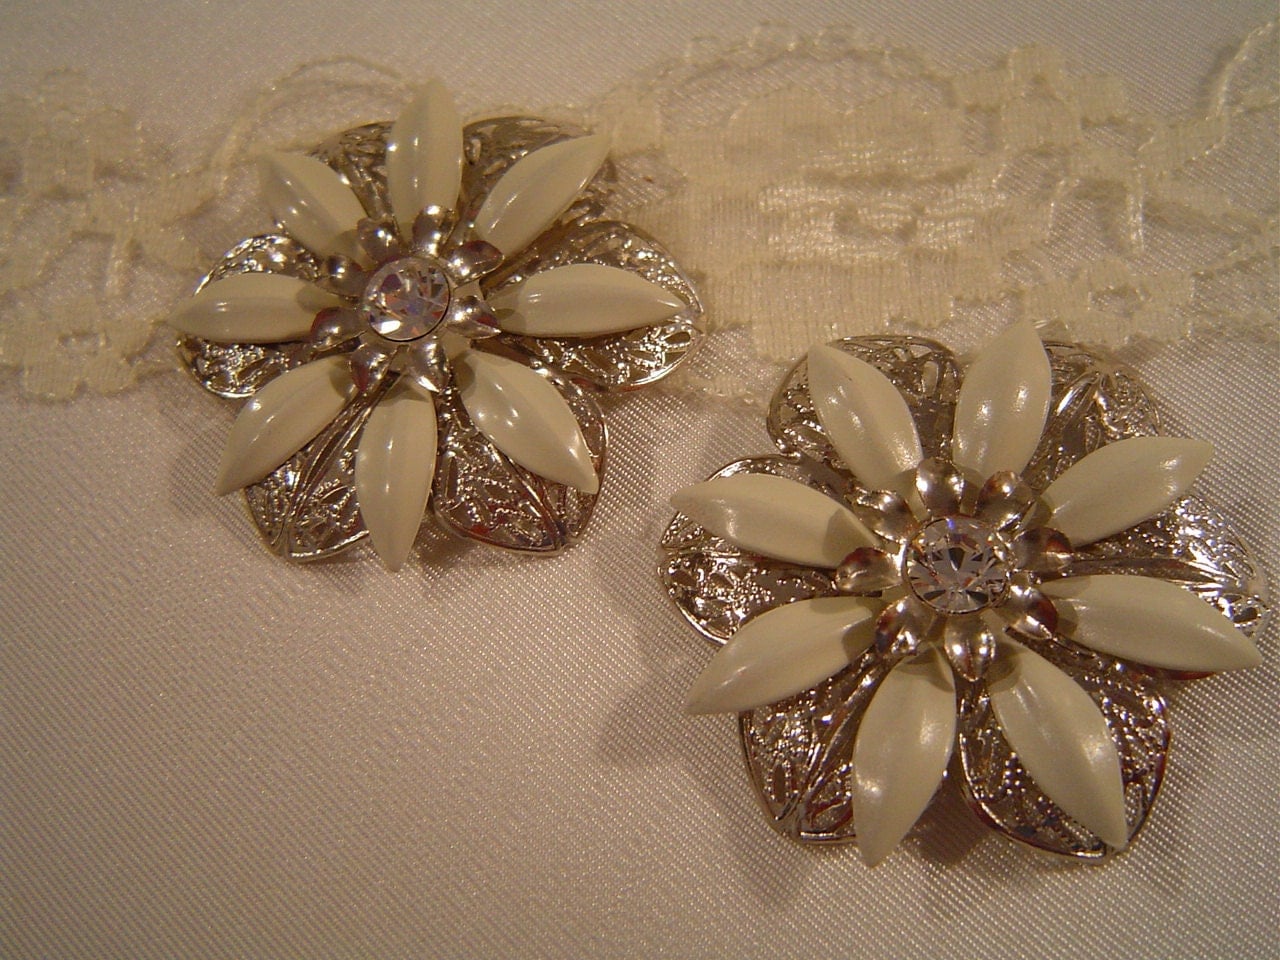 Bridal shoe clips made with Swarovski rhinestones and enameled flowers